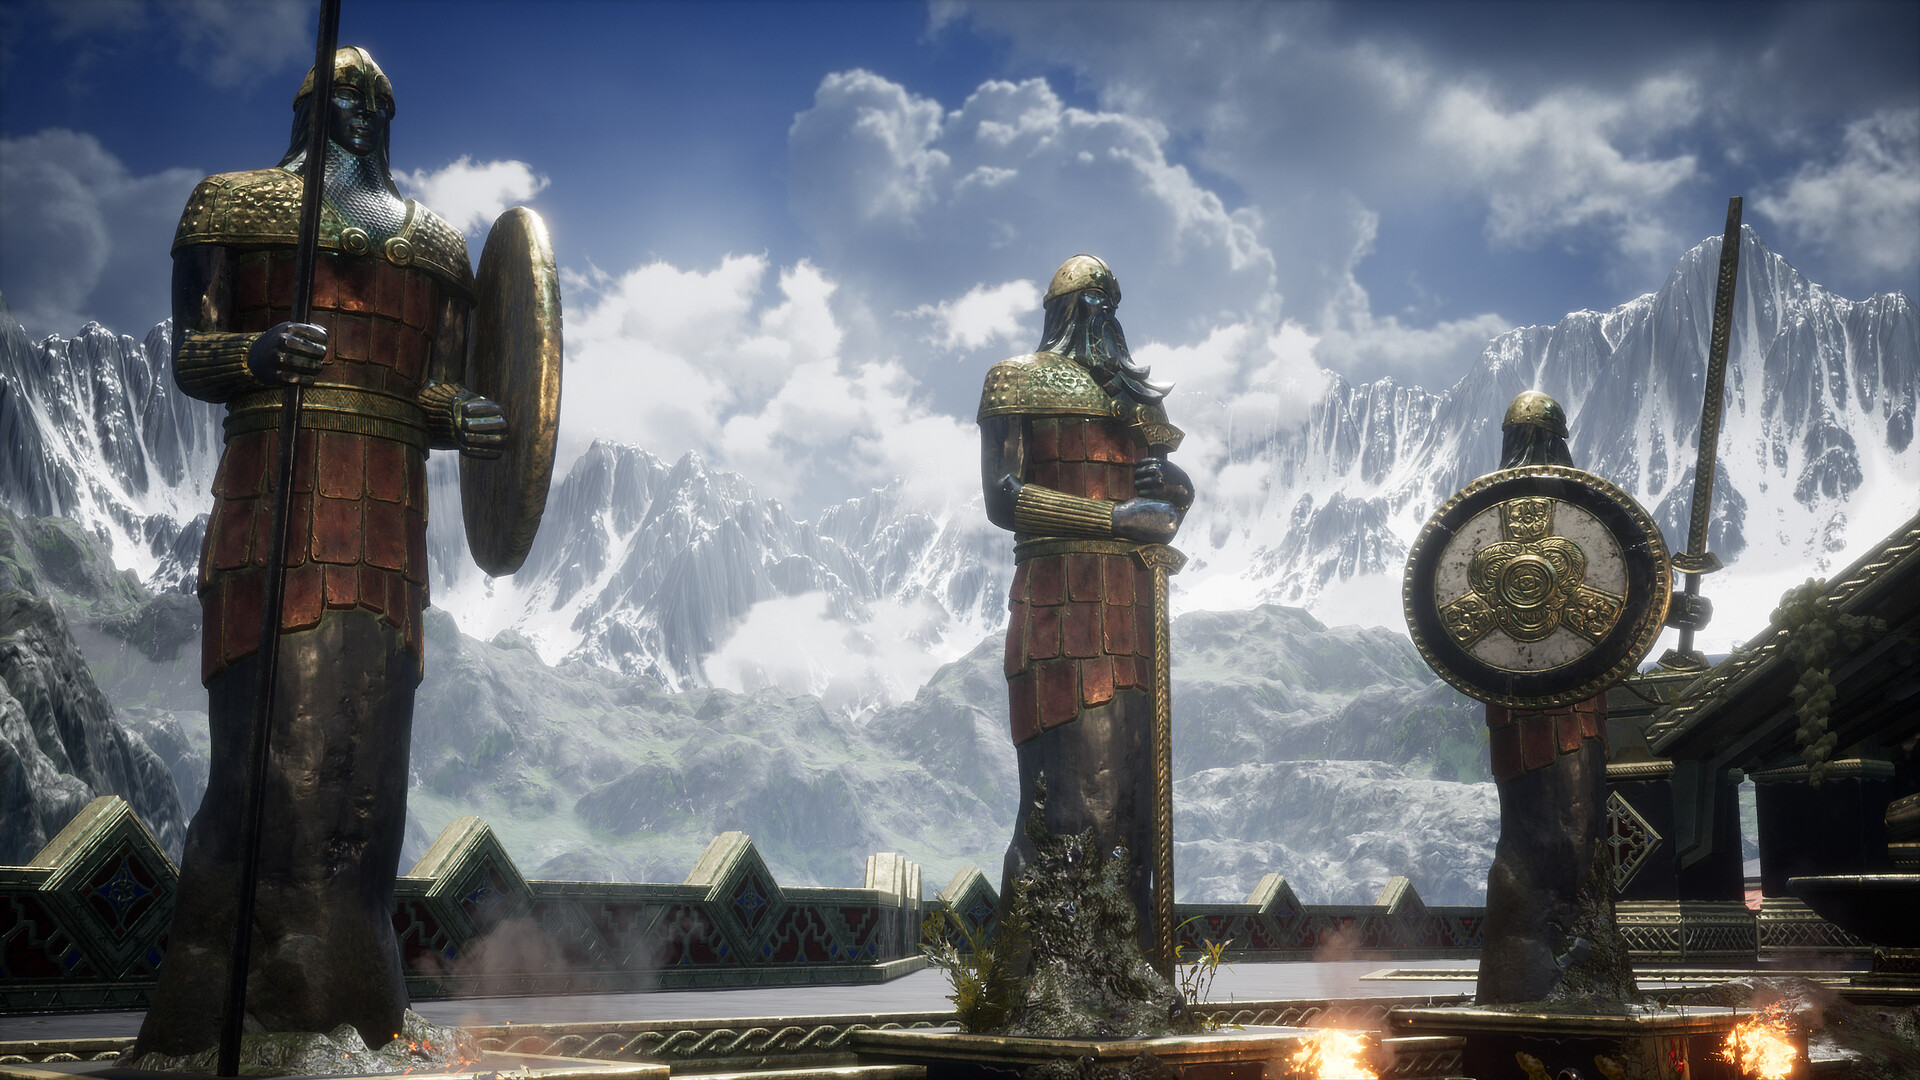 ArtStation - God Of War: Tyr Statue